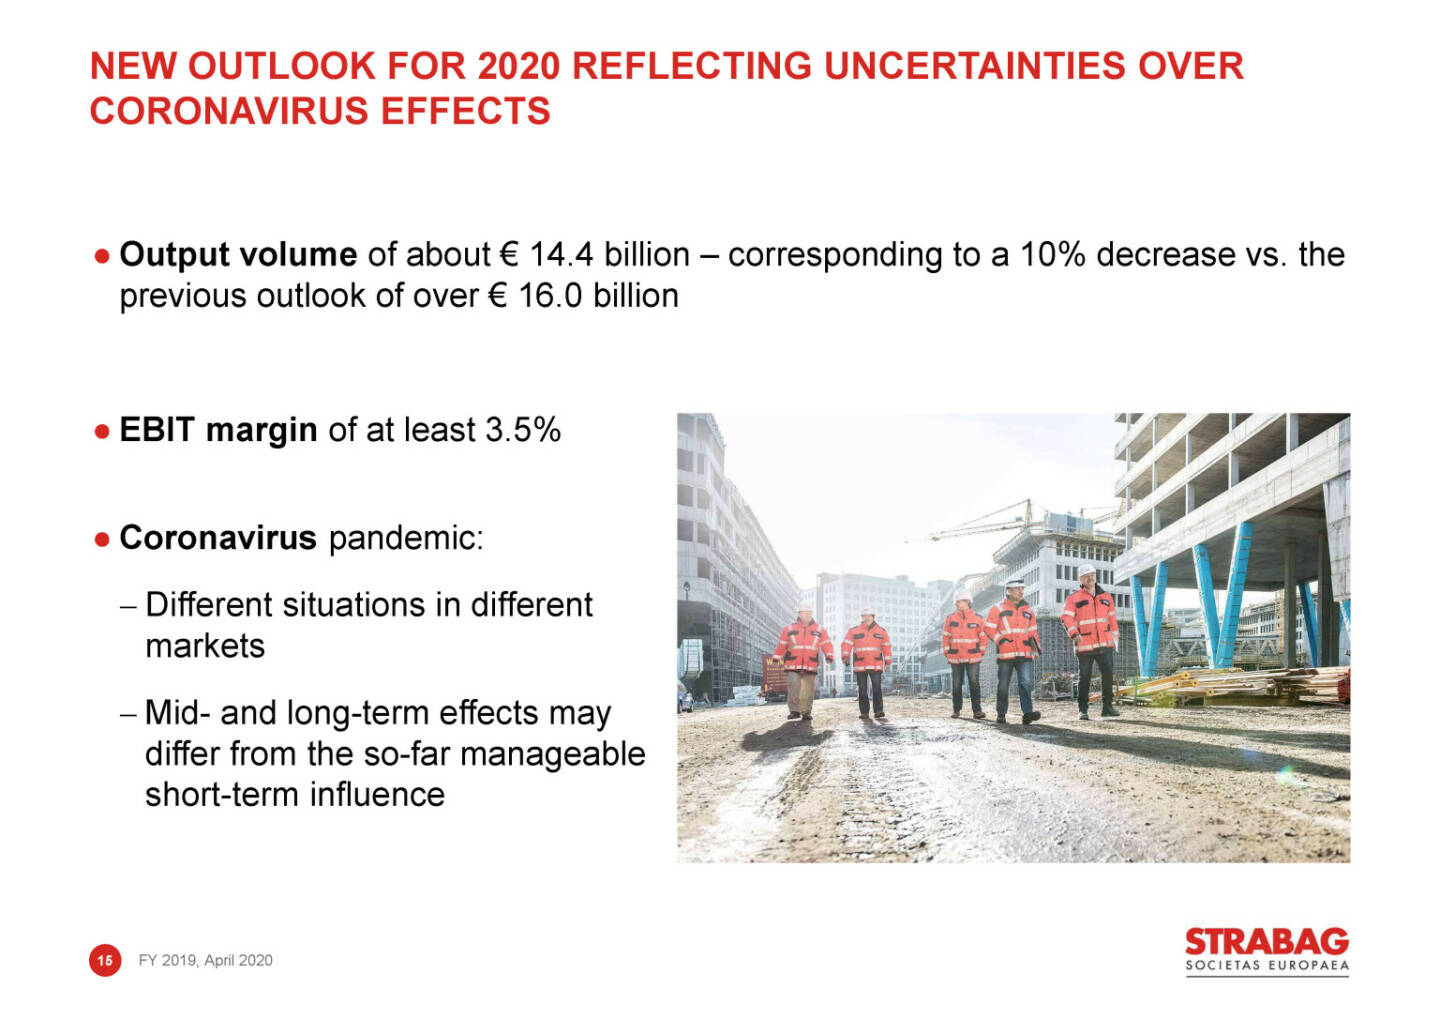 Strabag - new outlook for 2020 reflecting uncertainties over coronavirus effects